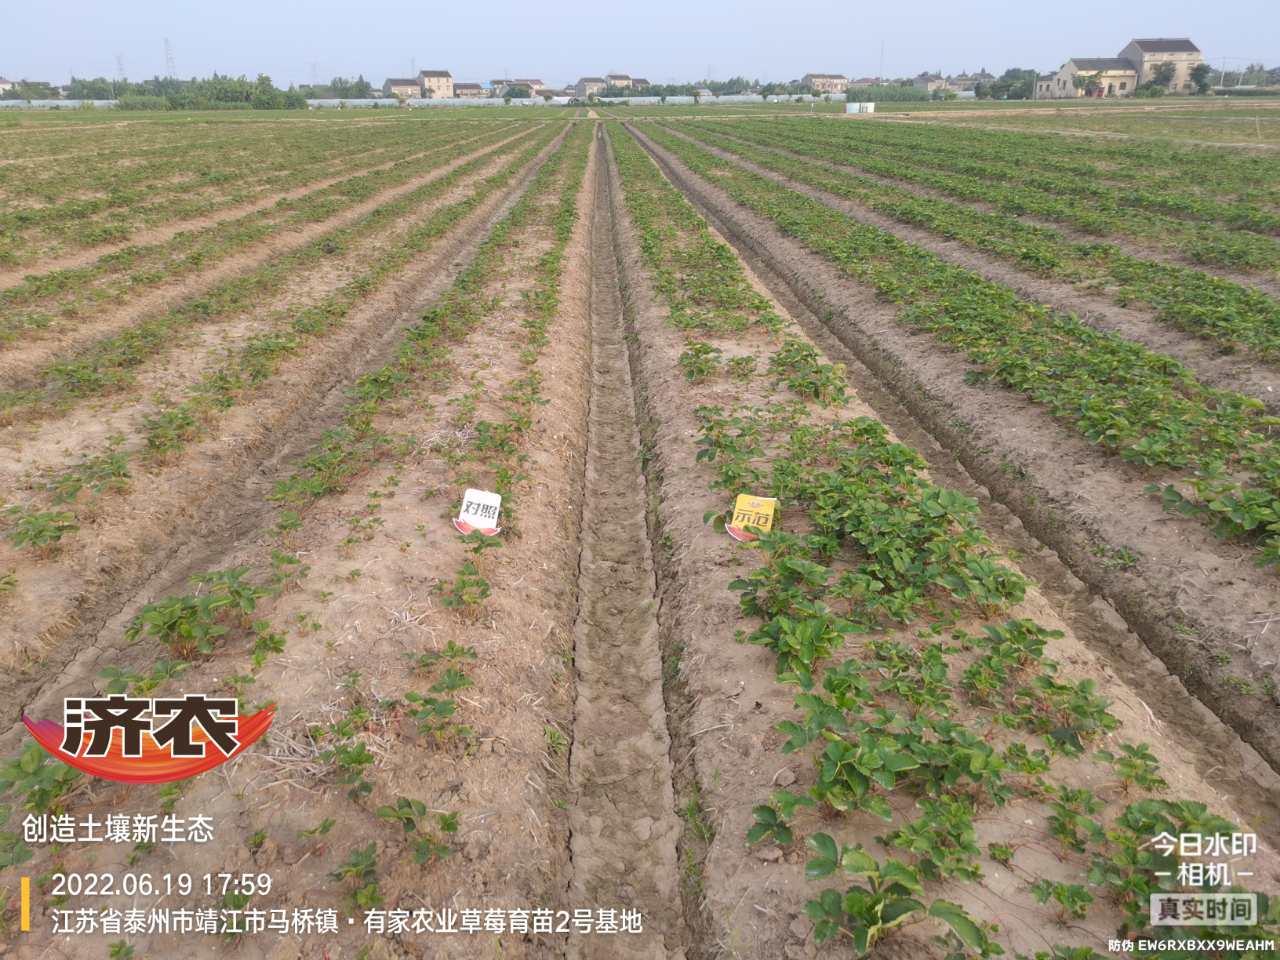 The effect of using Jinong Letu to raise seedlings of strawberries in Jiangsu province(图1)